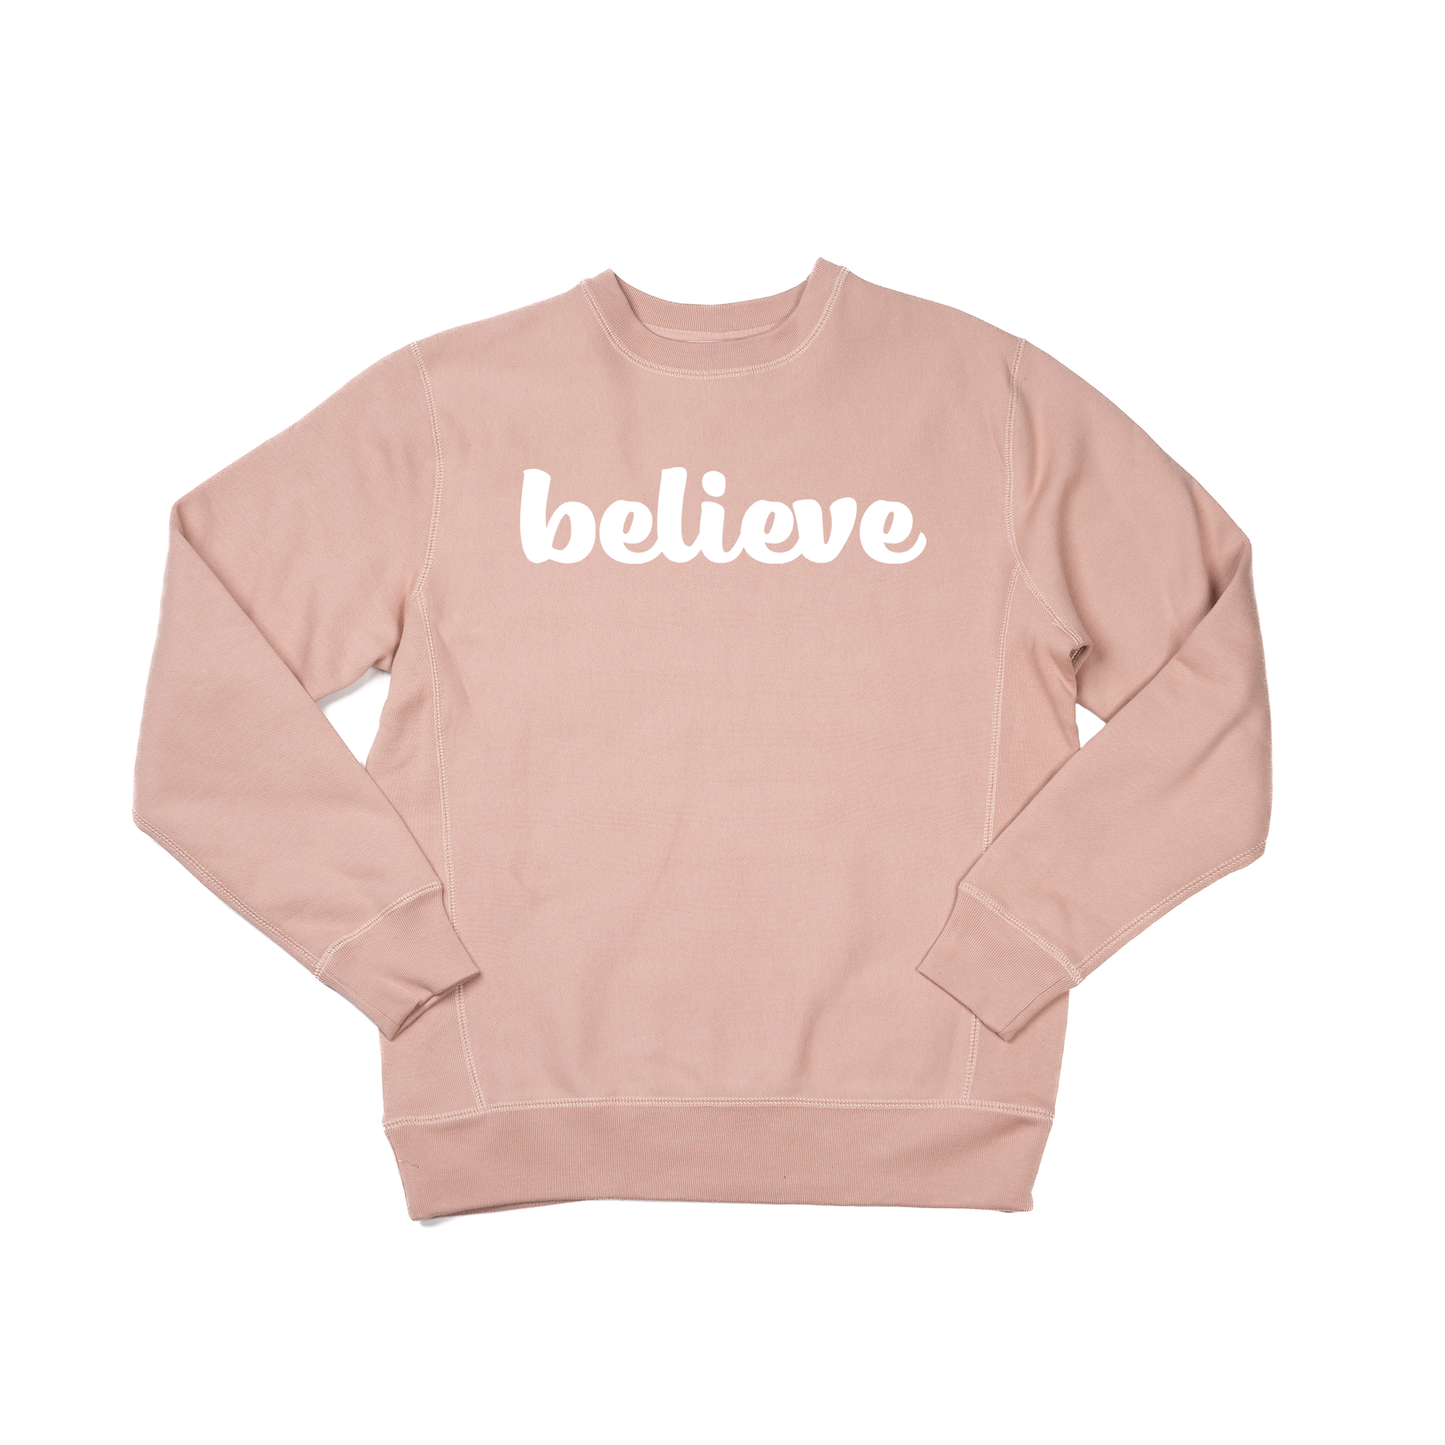 Believe (Thick Cursive, White) - Heavyweight Sweatshirt (Dusty Rose)